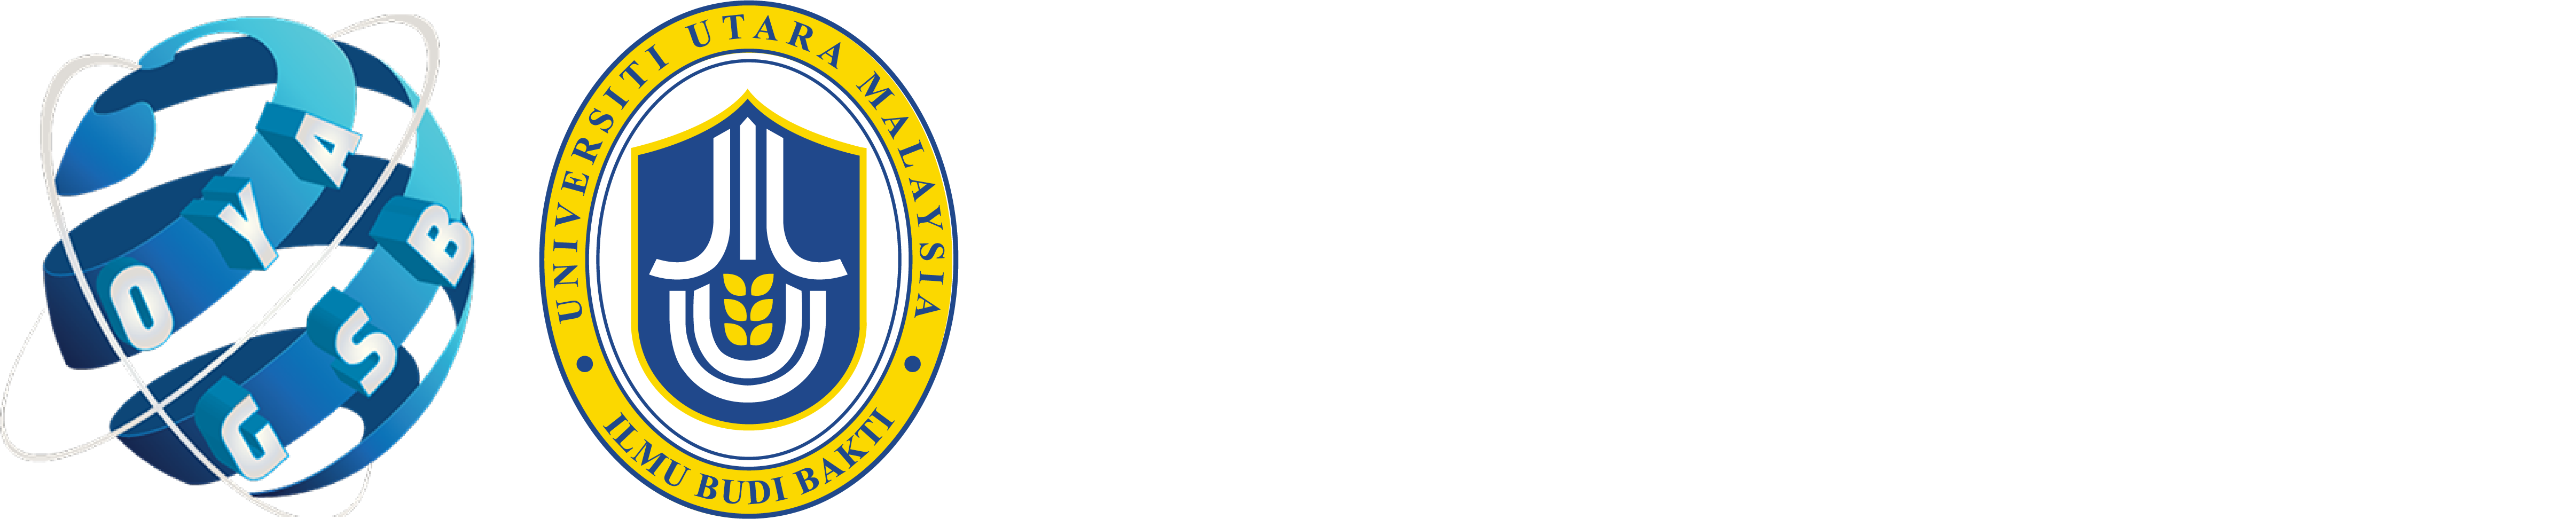 Othman Yeop Abdullah Graduate School of Business